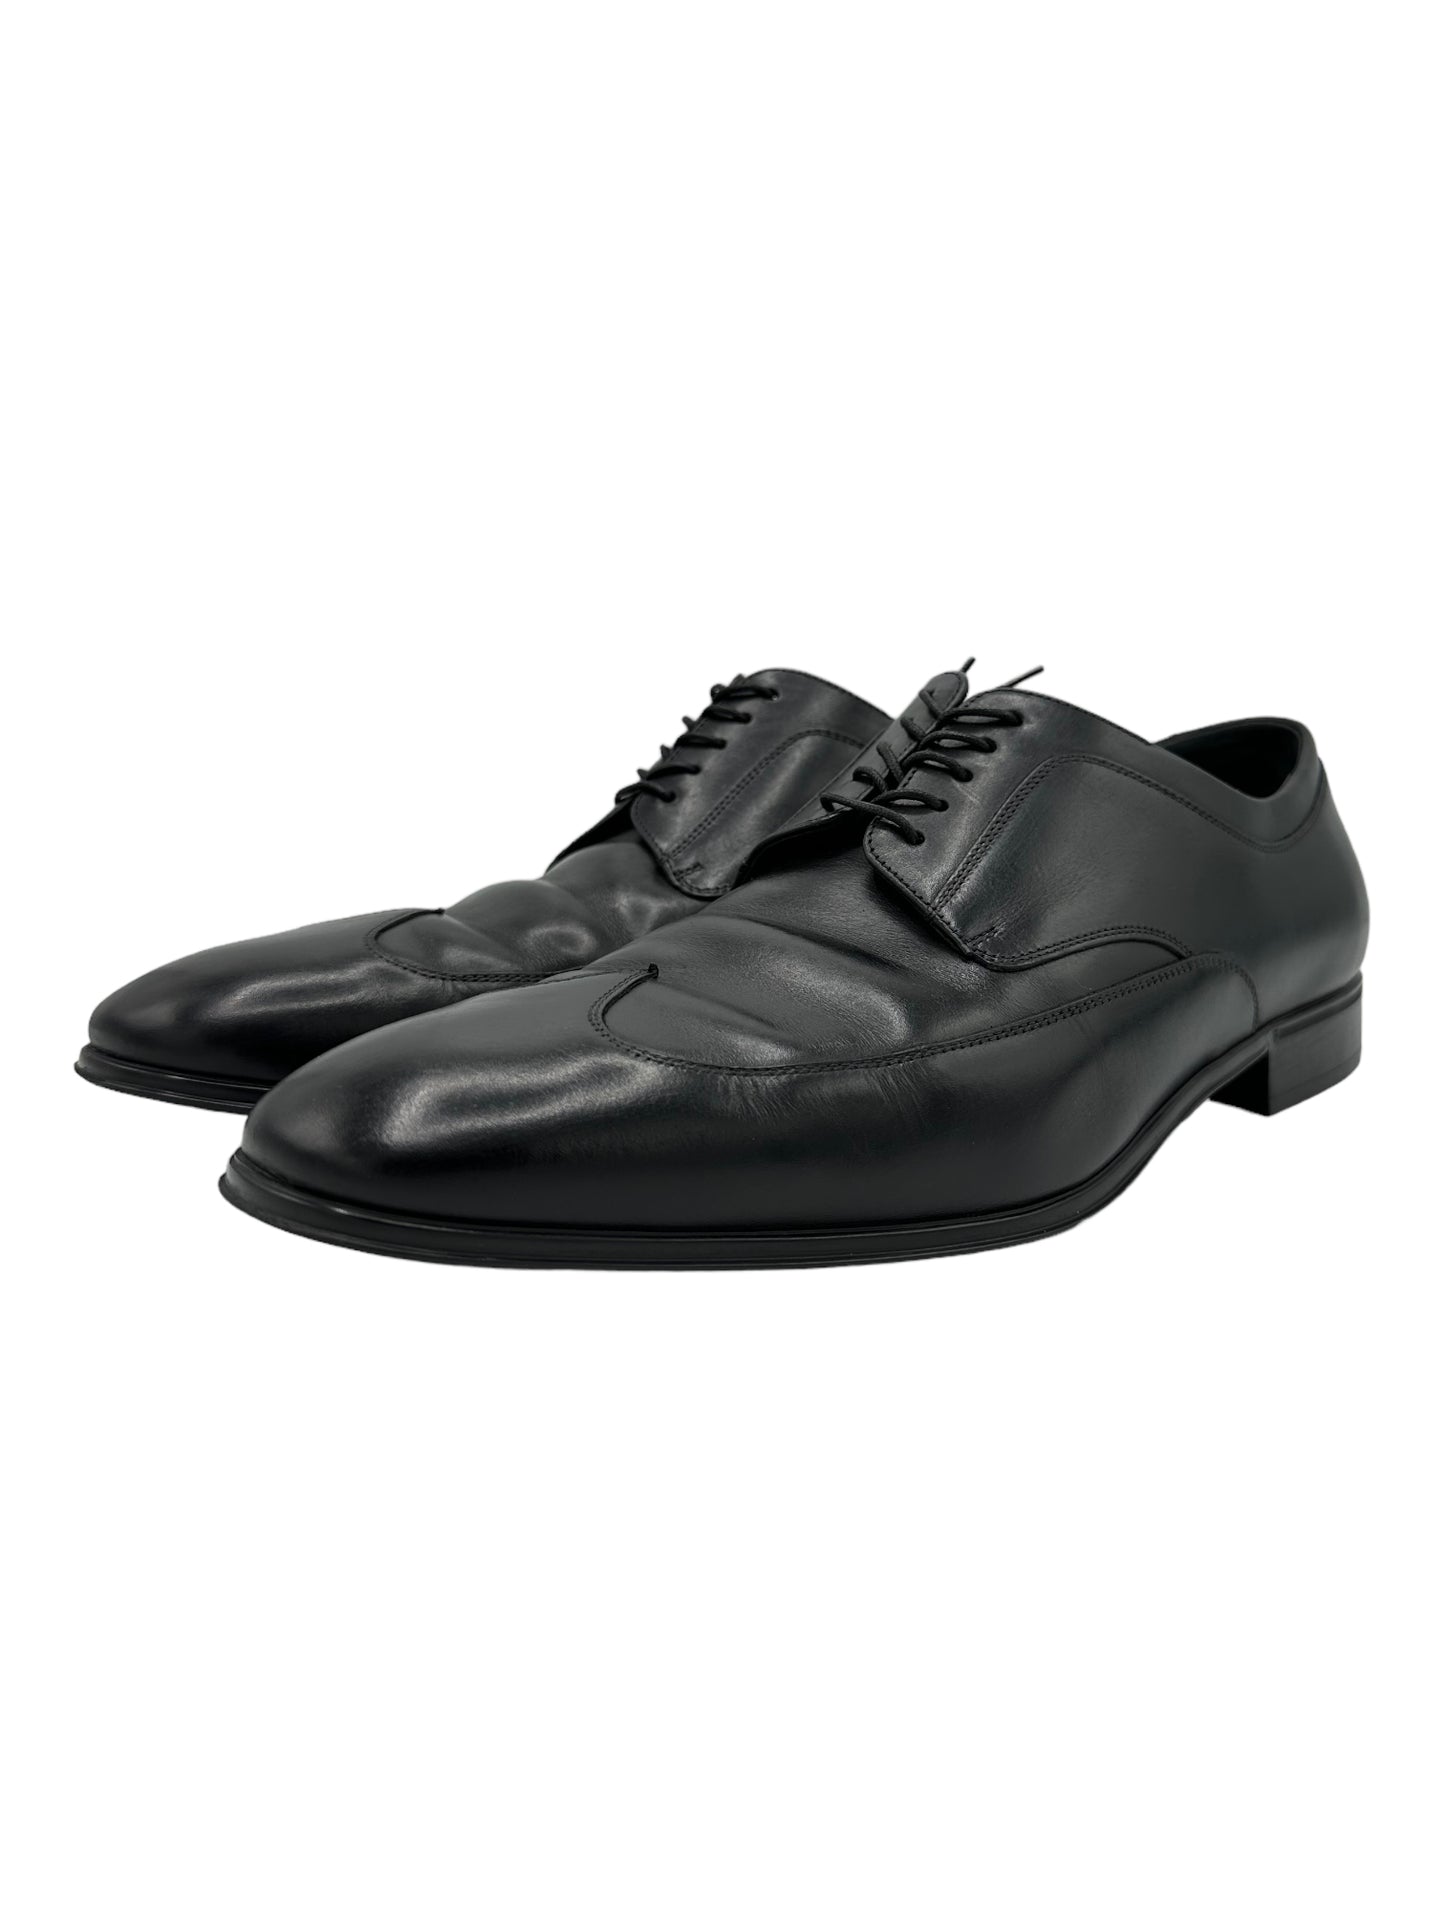 Salvatore Ferragamo Black Wingtip Oxford Leather Dress Shoes